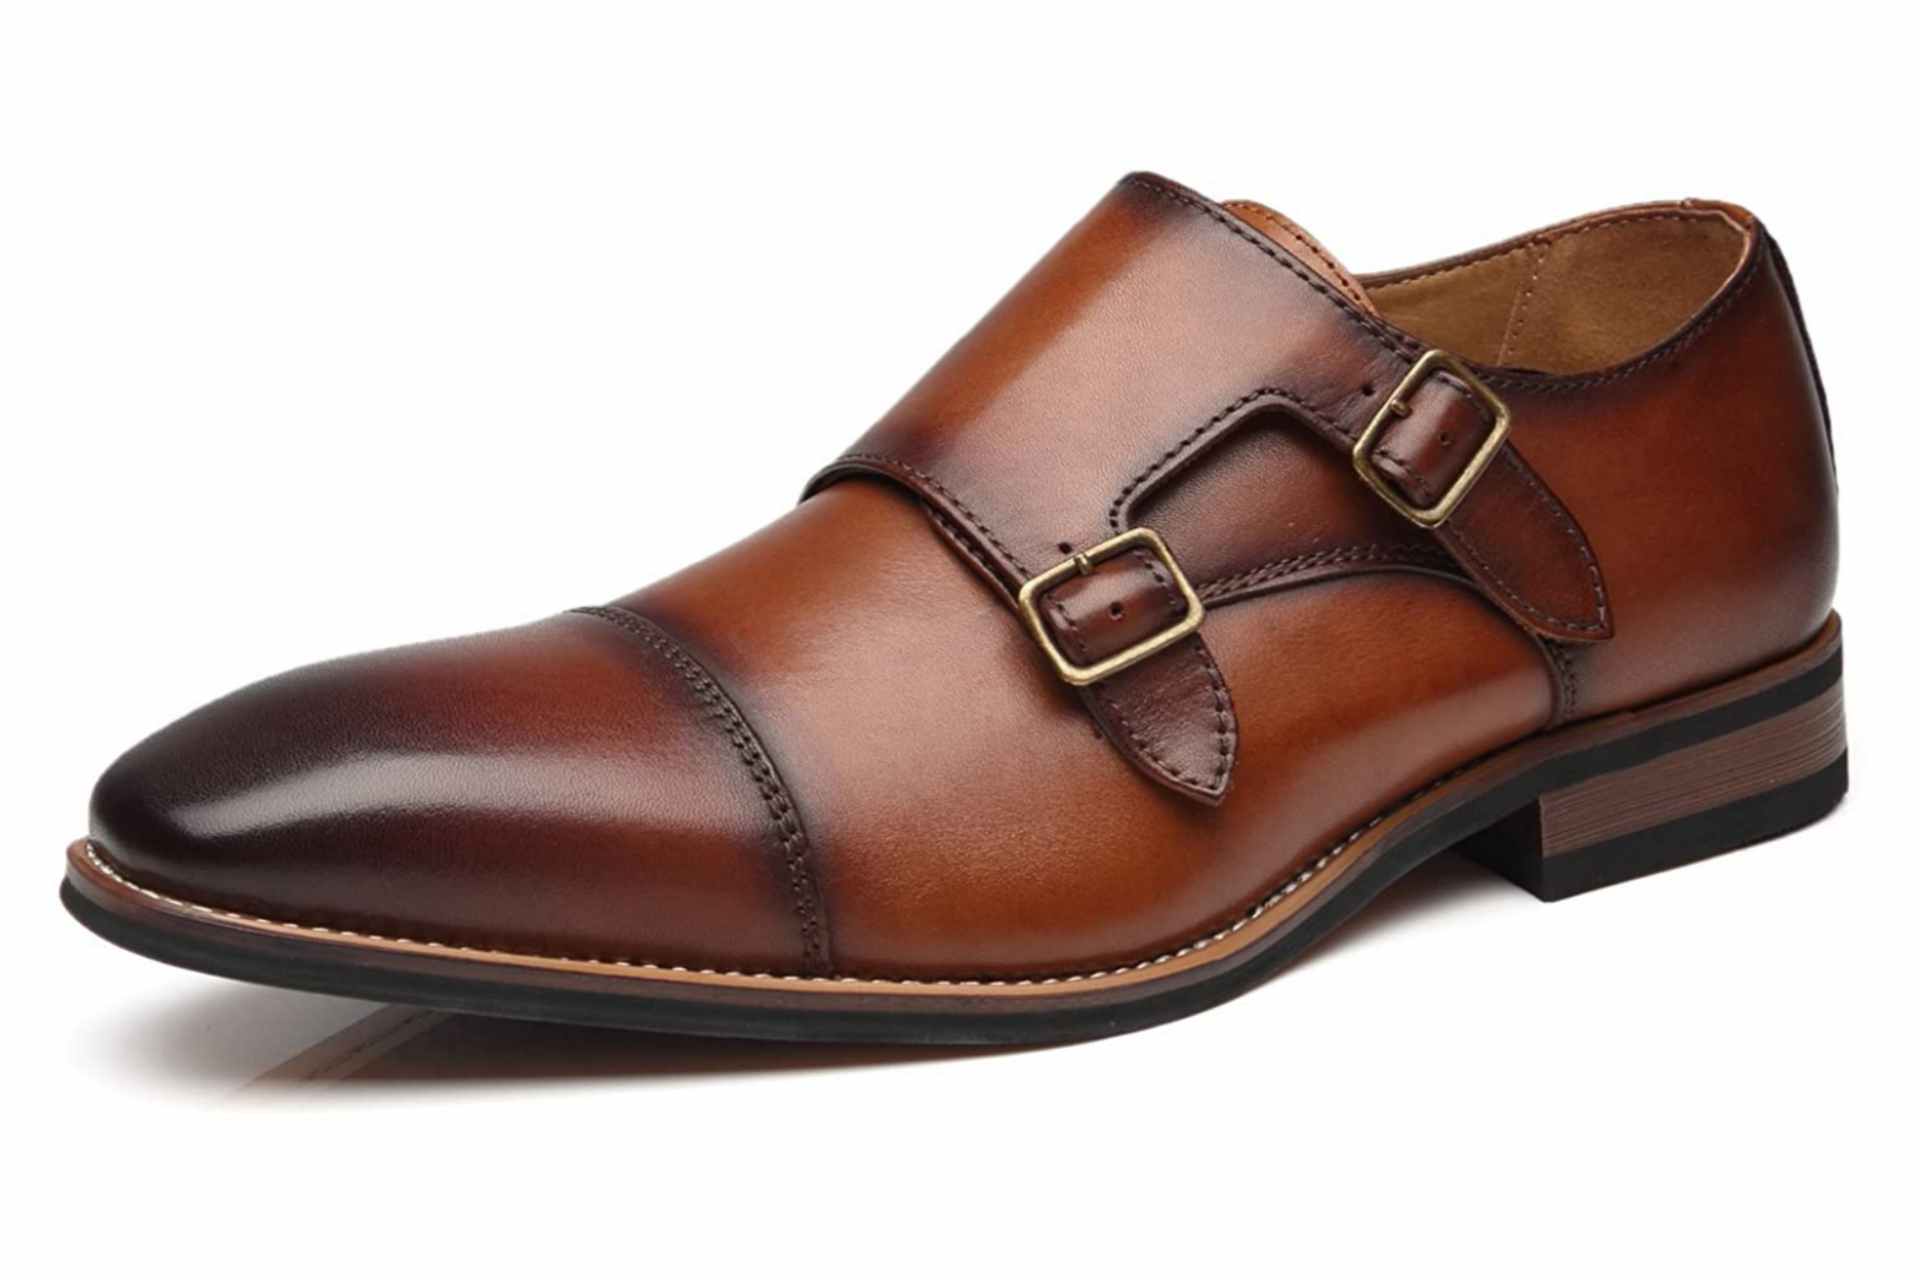 Best brown double Monk strap shoes for men